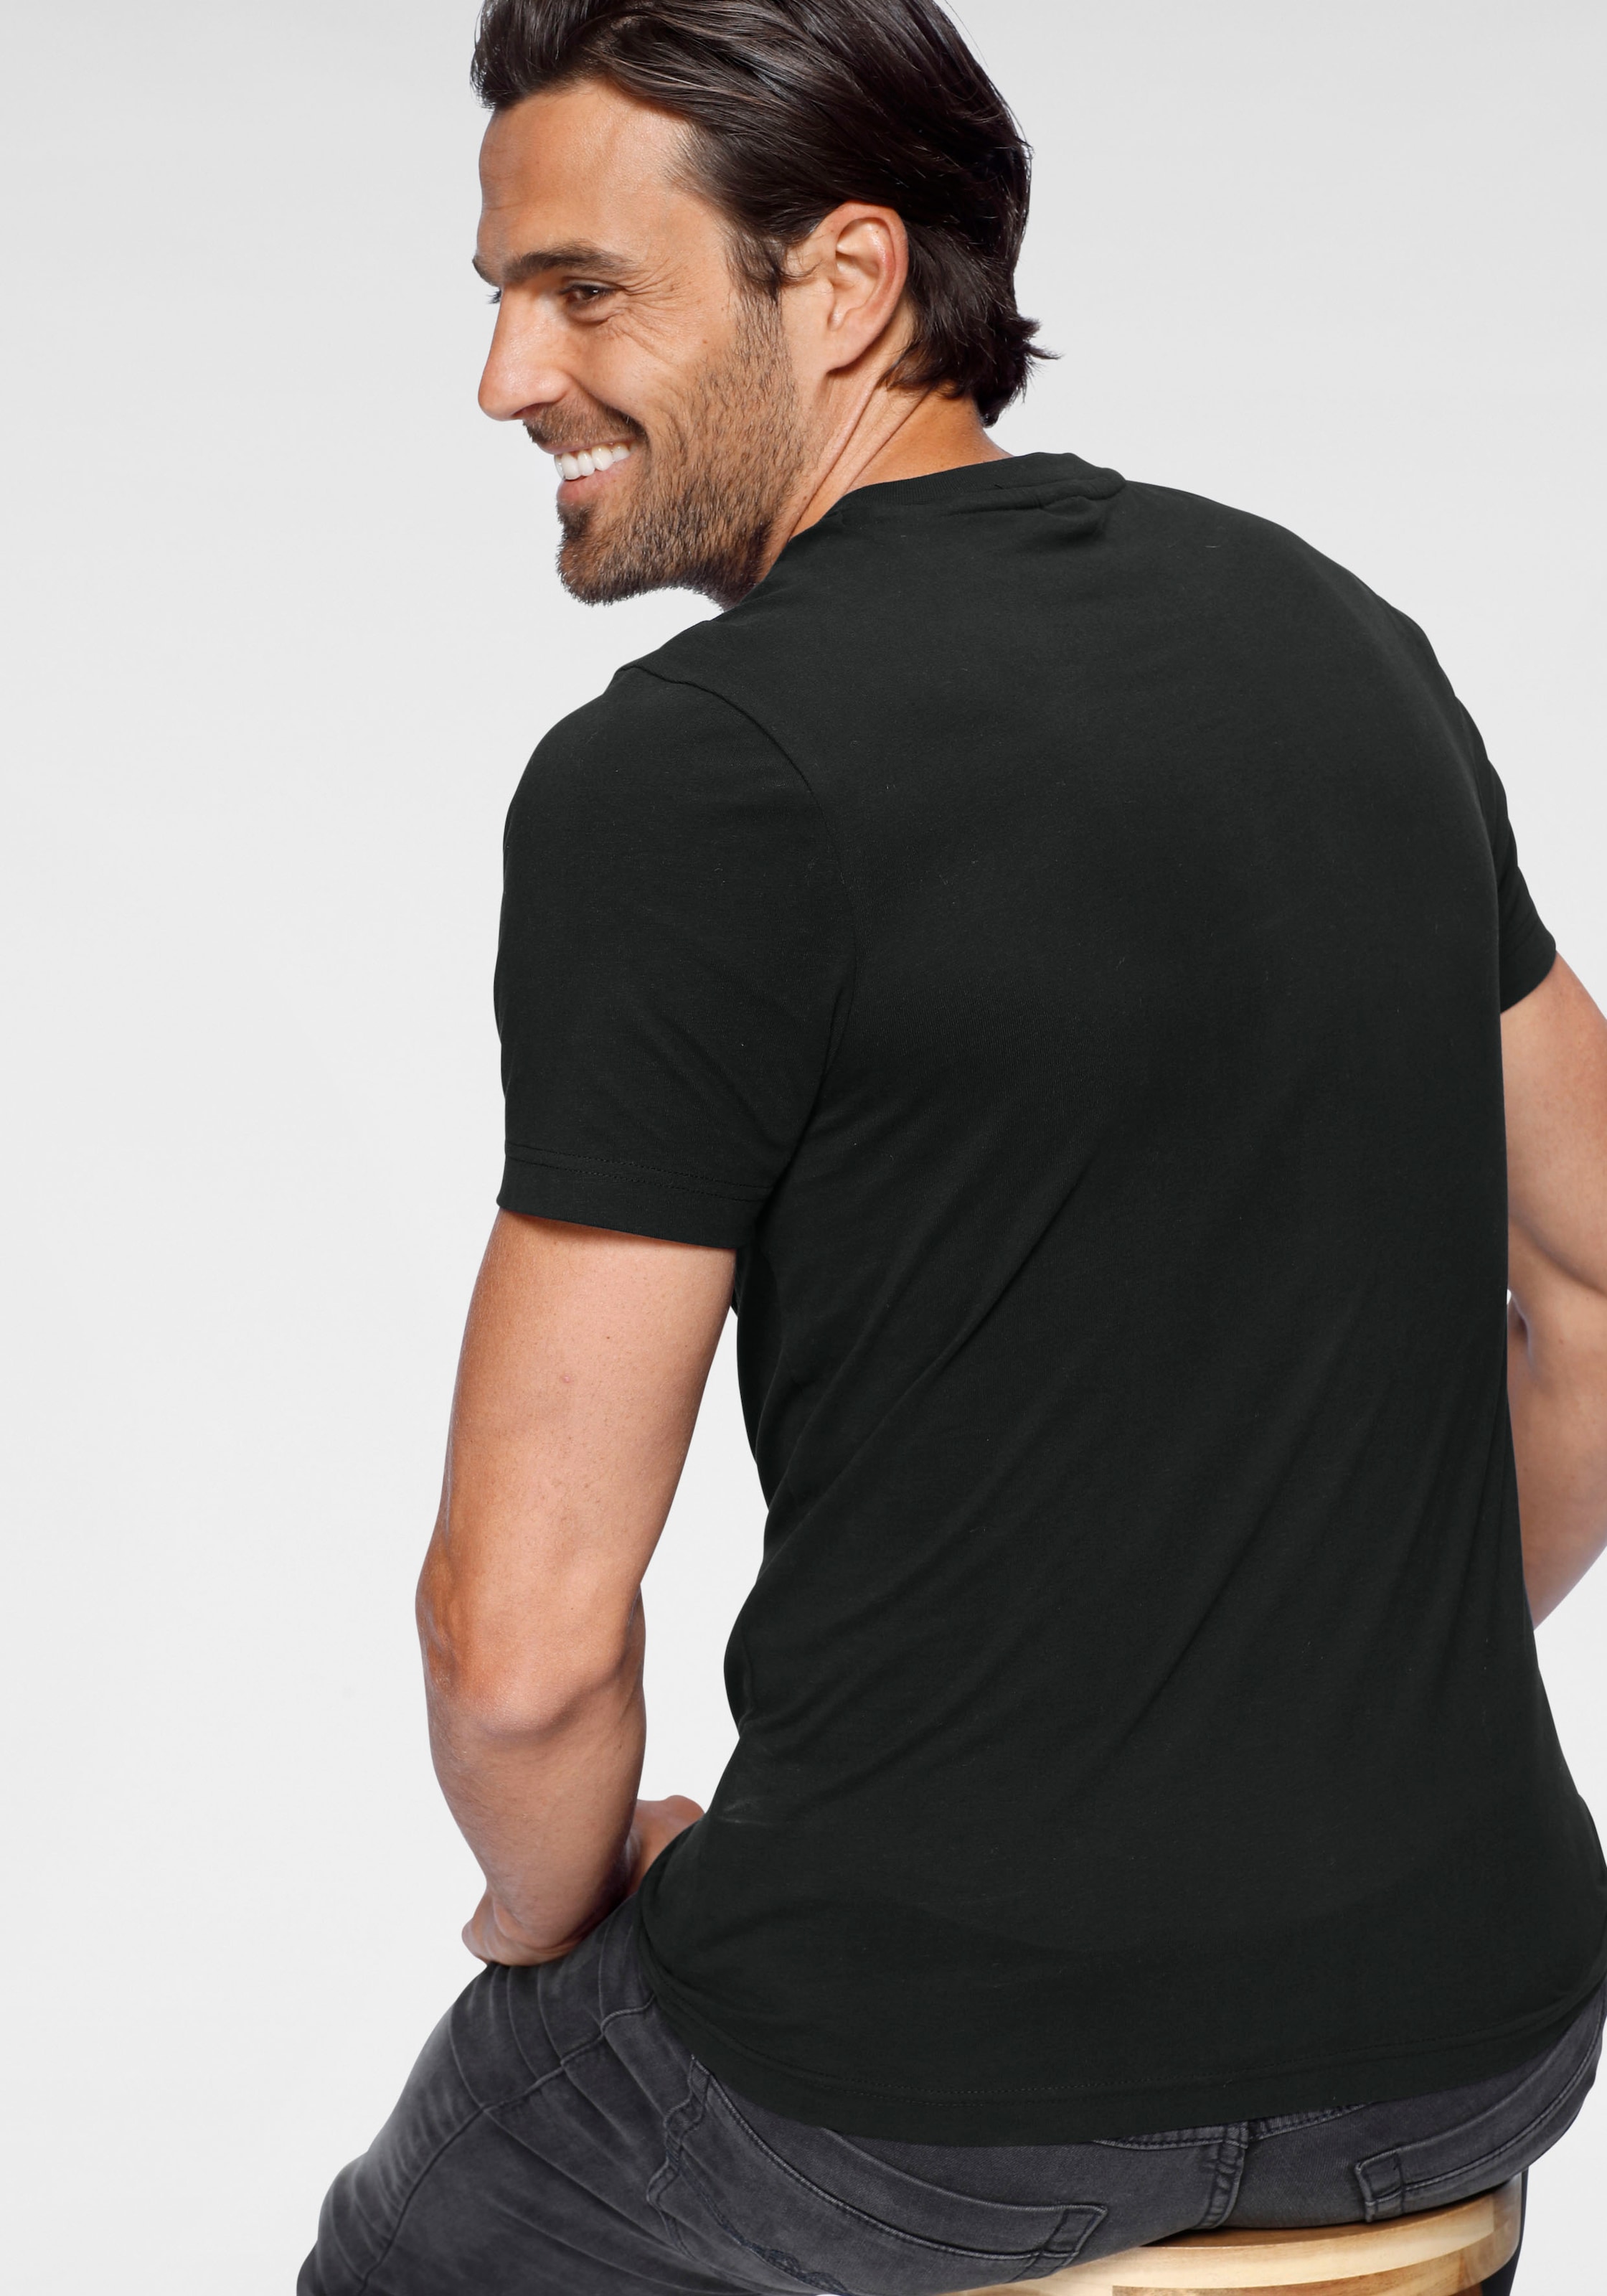 KangaROOS T-Shirt, unifarben online shoppen bei OTTO